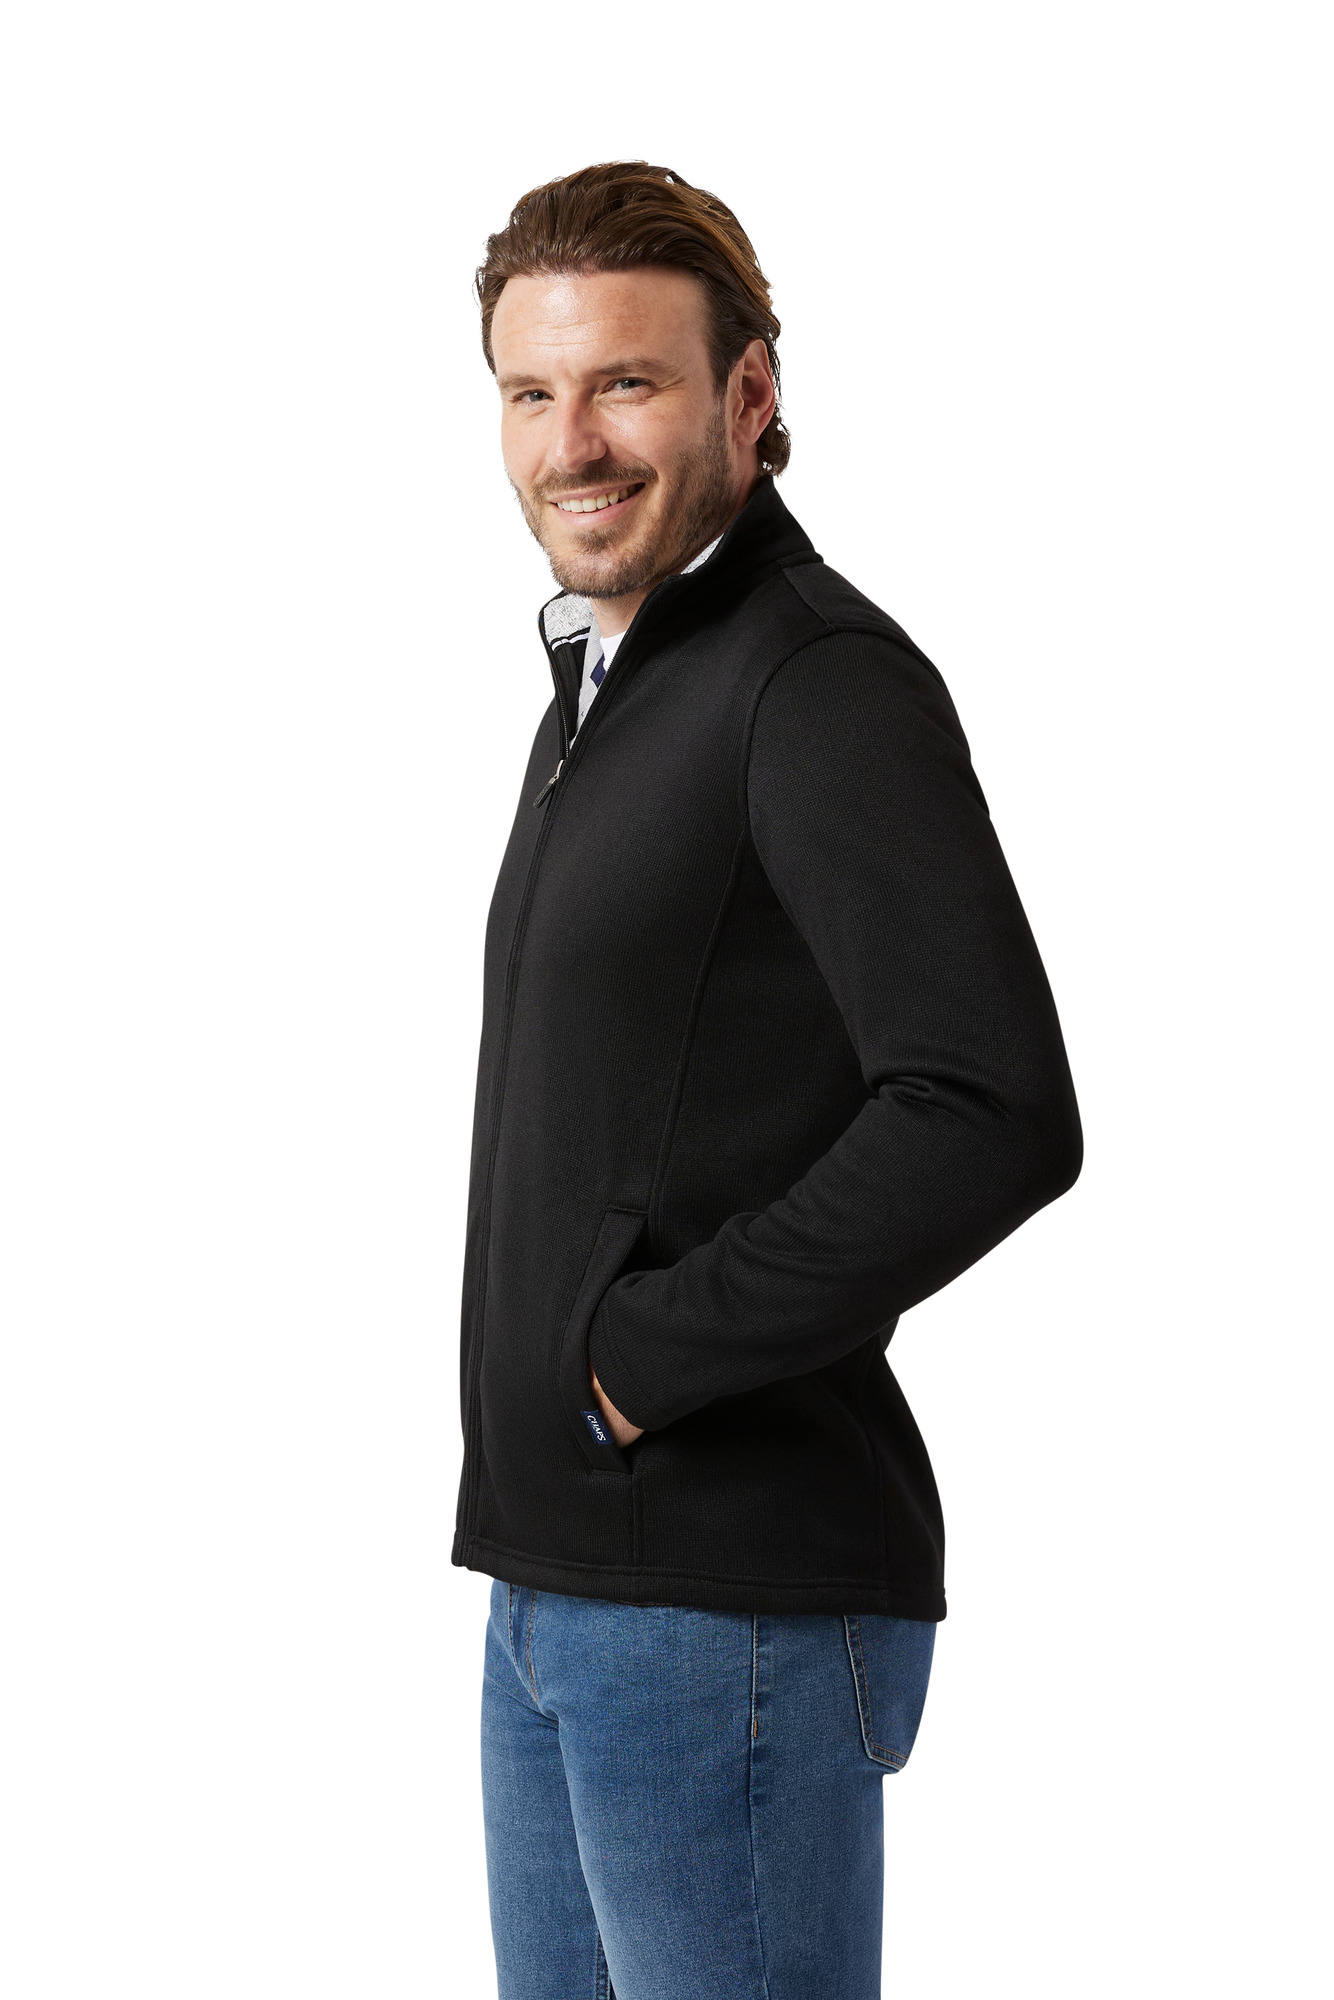 Chaps Men's & Big Men's Sherpa Lined Fleece Snap Front Sweater Jacket - image 5 of 5